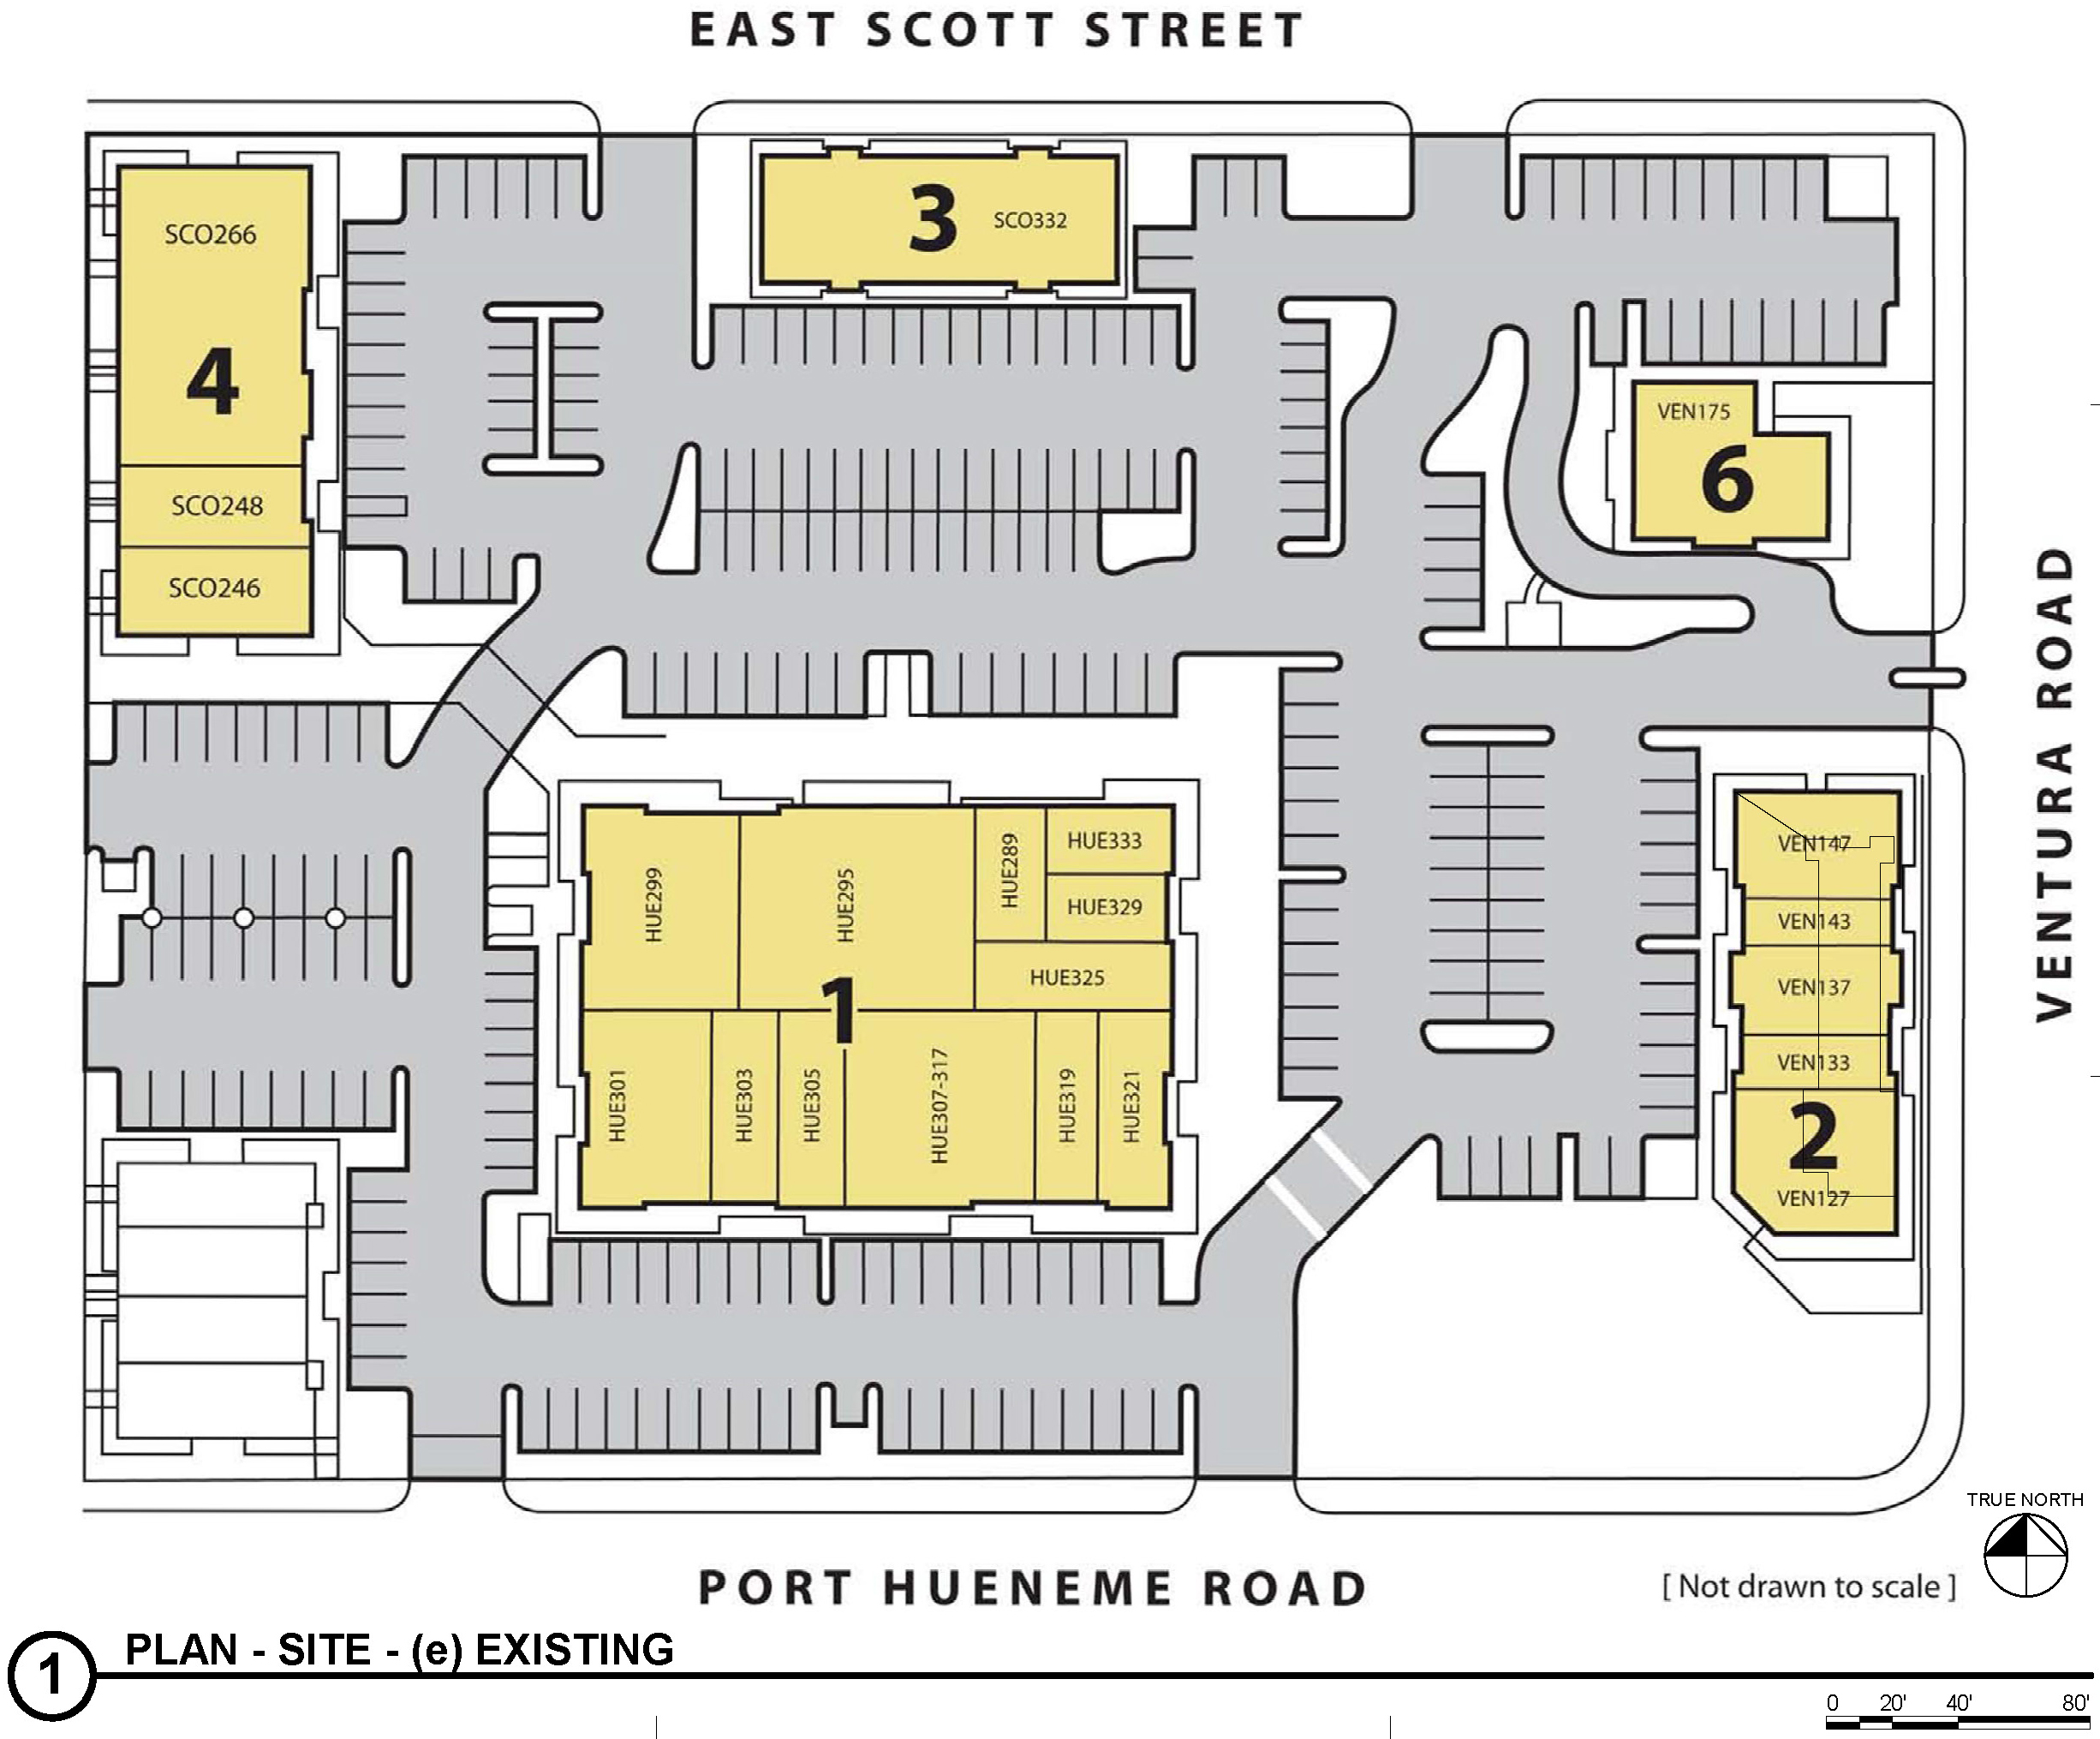 Beachport Center Facade Study, ENR architects, Granbury, TX 76049 - Site Plan